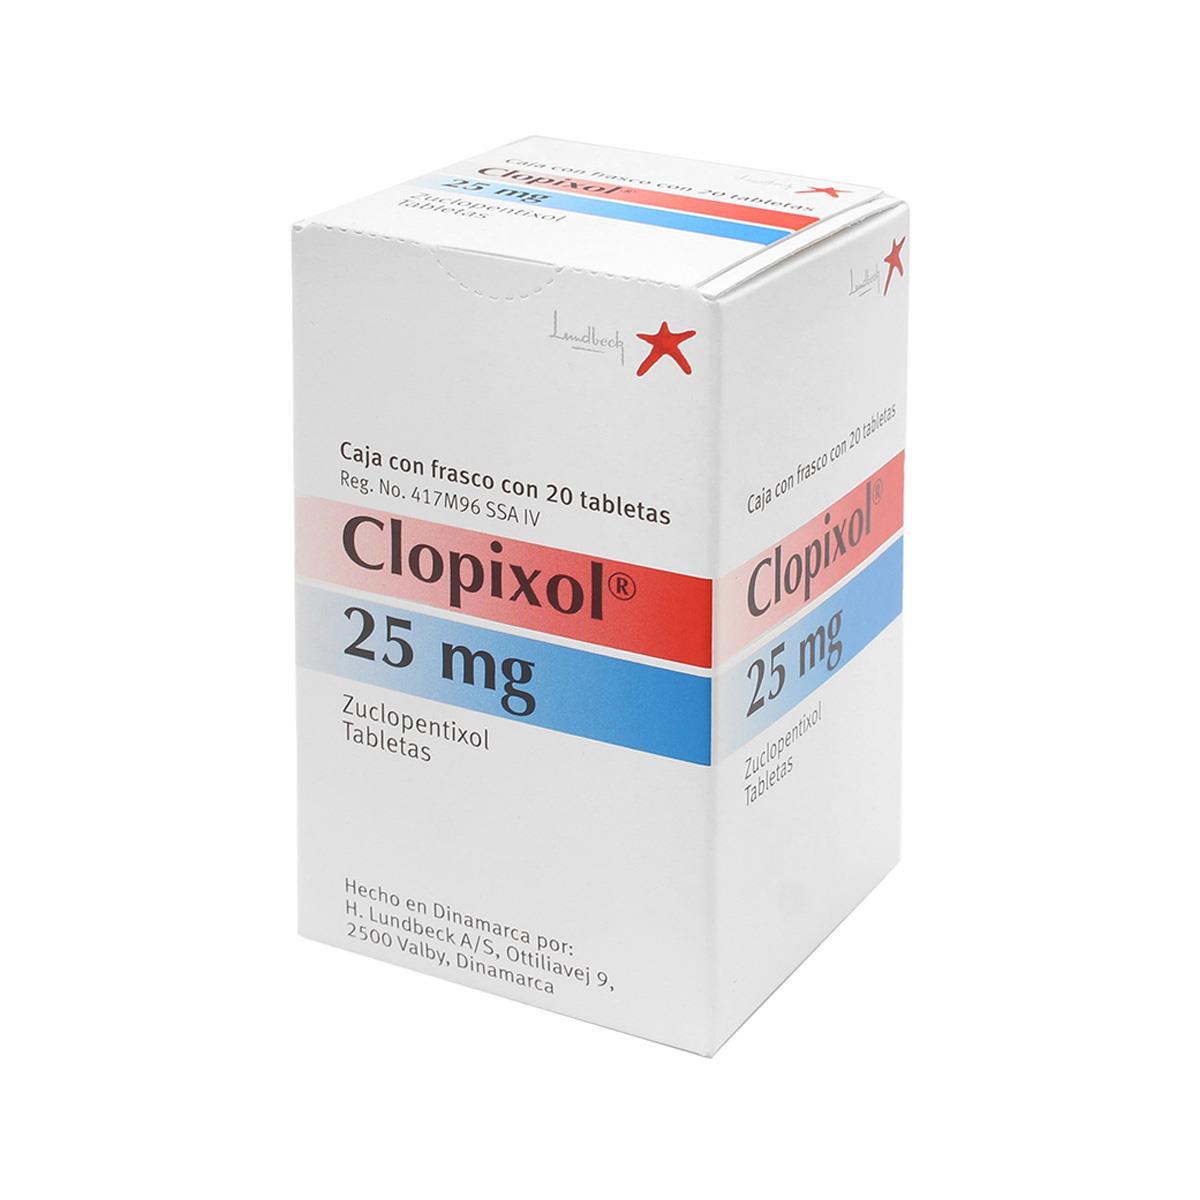 Clopixol 25 Mg Frasco 20 Tabletas